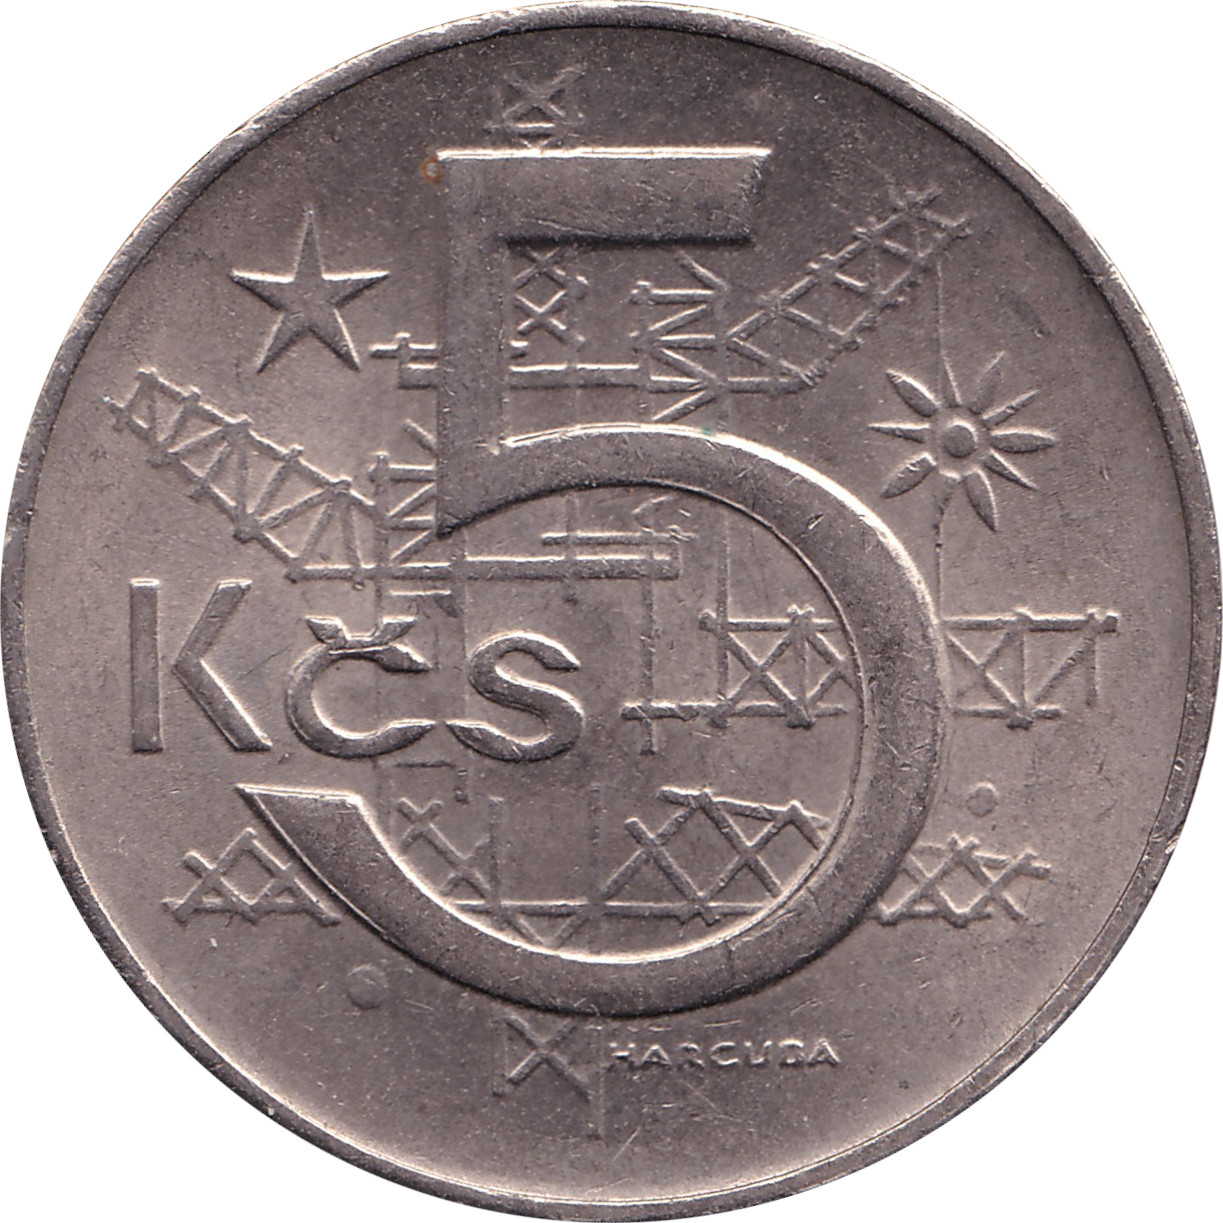 5 korun - Heraldic Lion